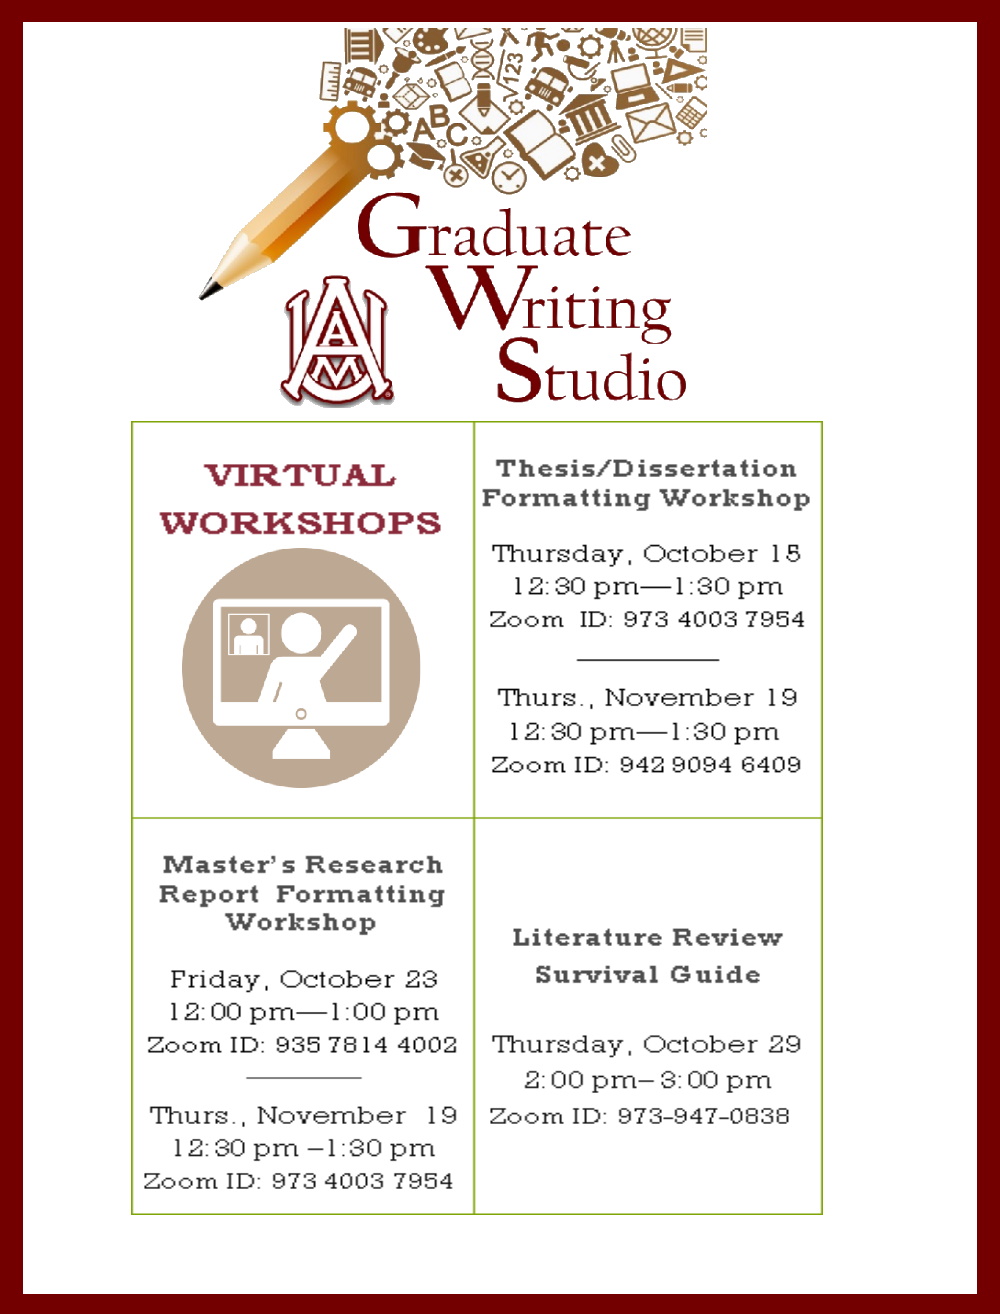 Graduate Student Success Center Fall Workshops